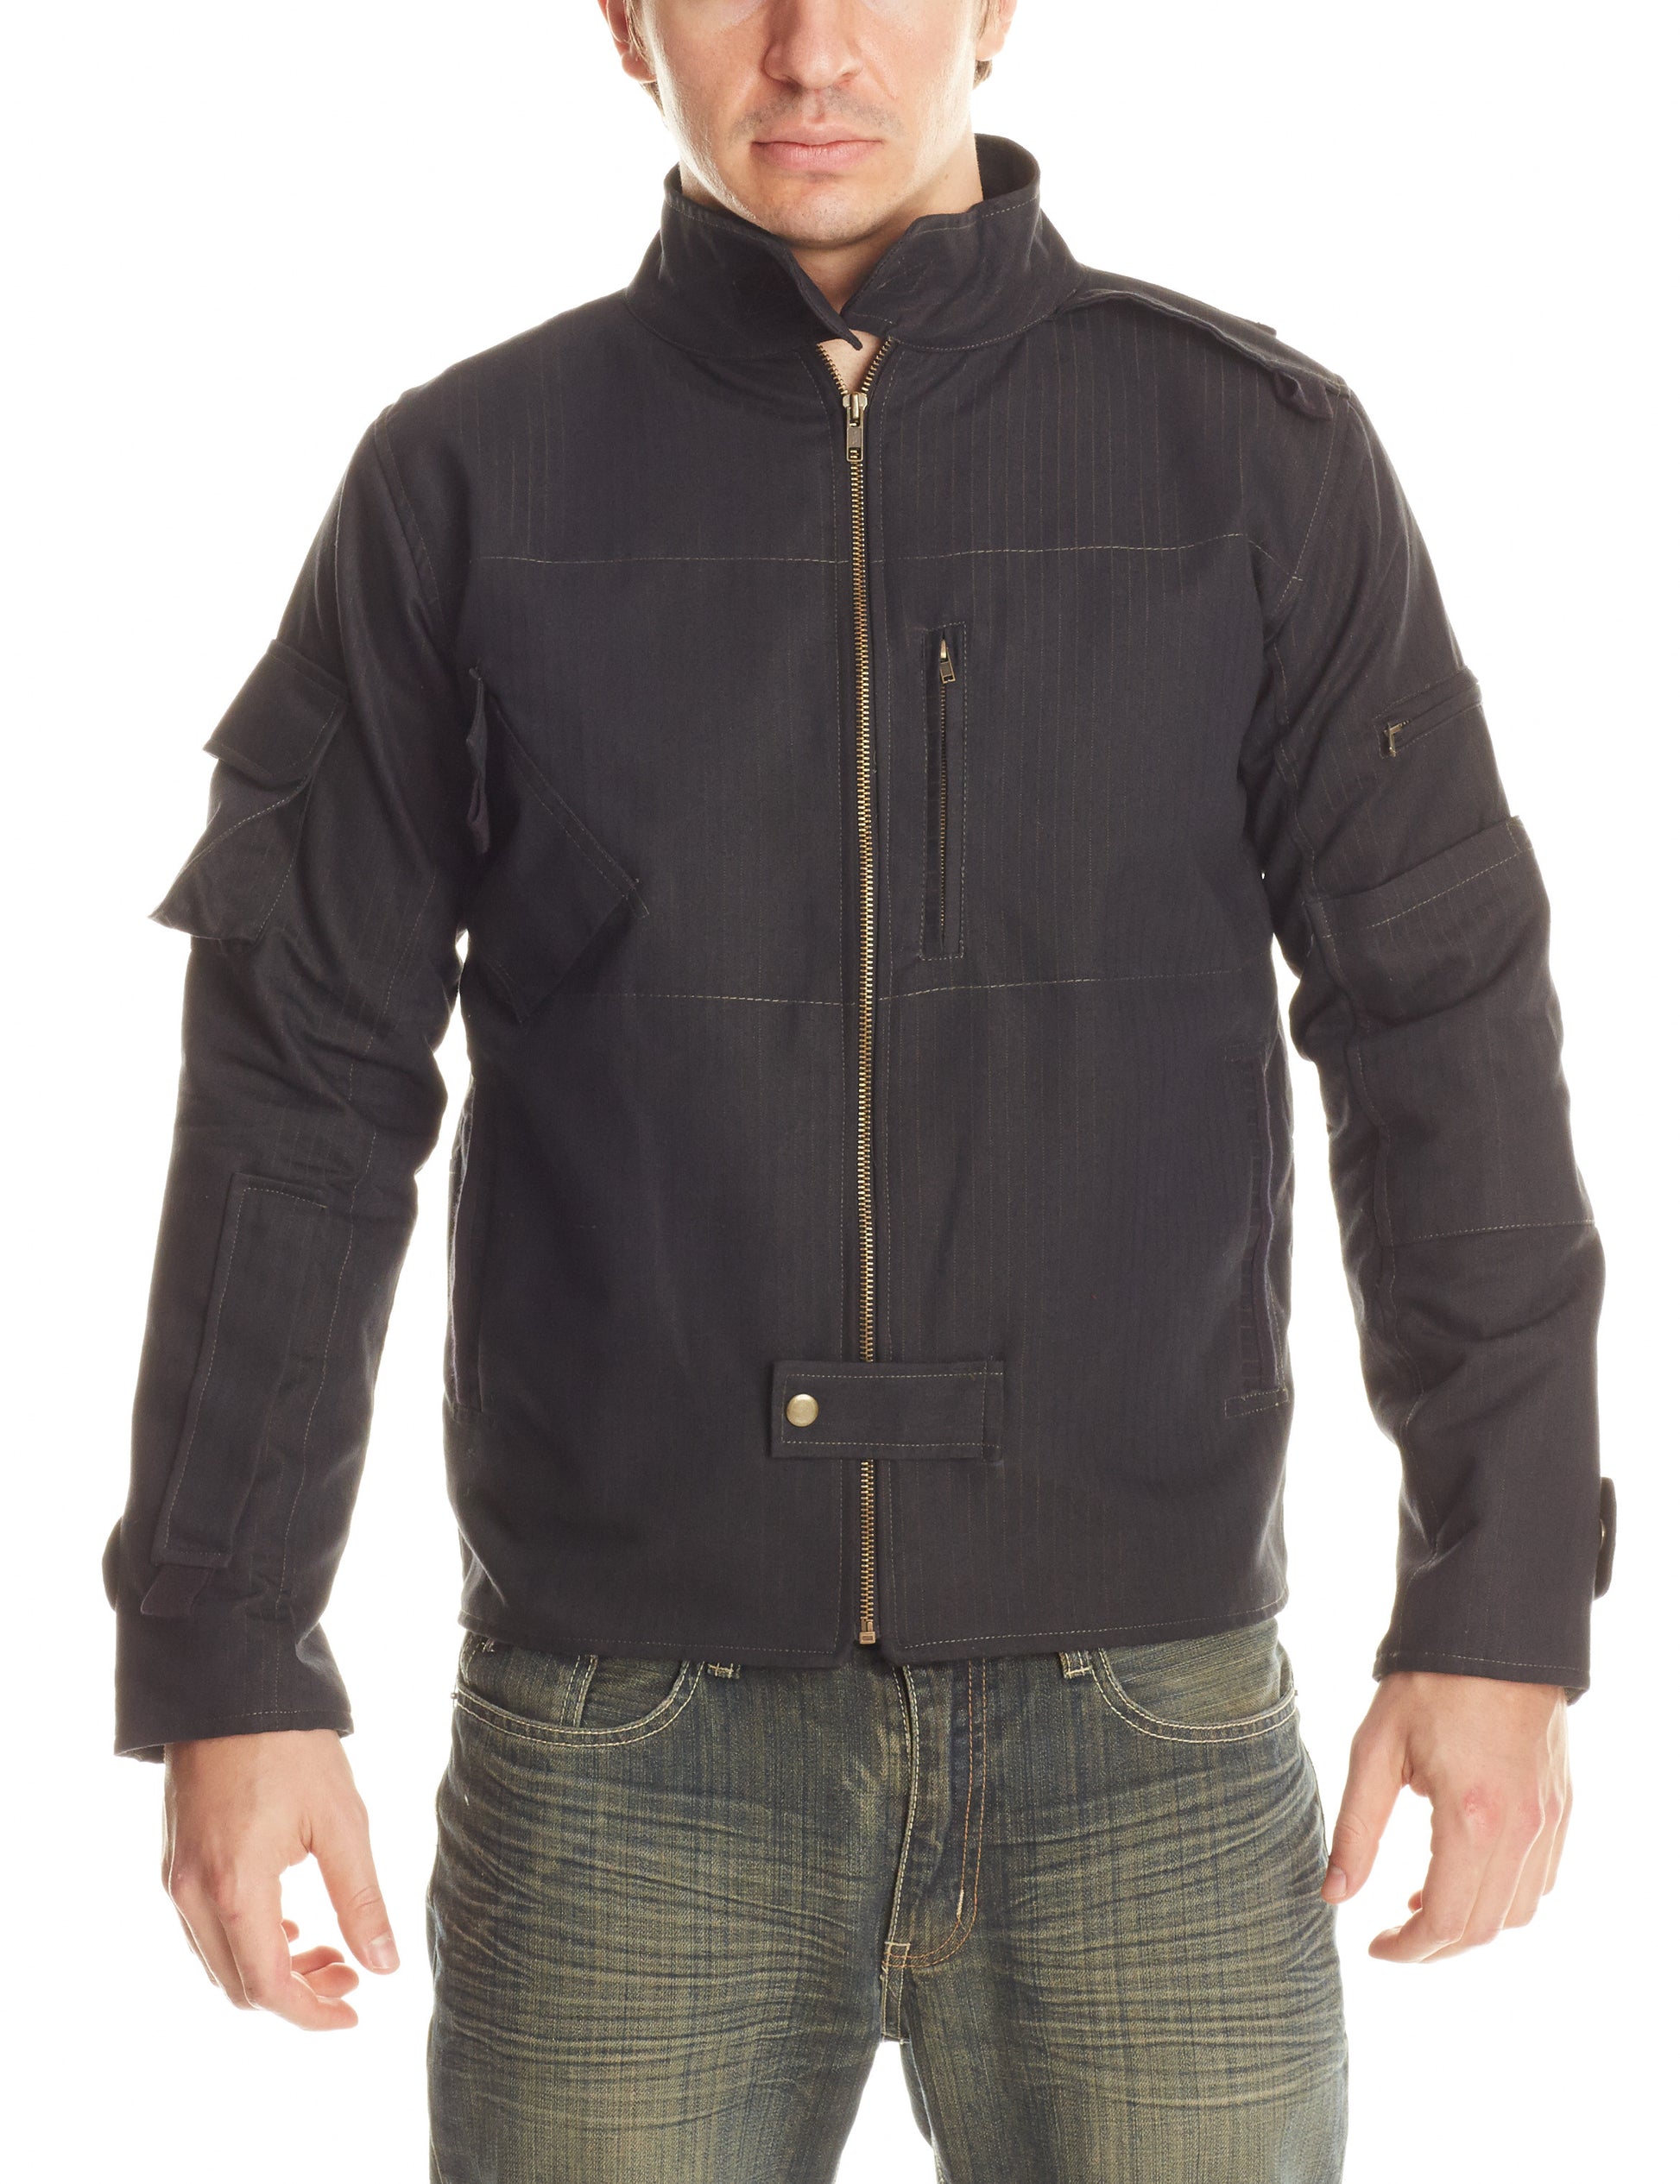 MR410 Pinstripe Jacket - Mishu Boutique